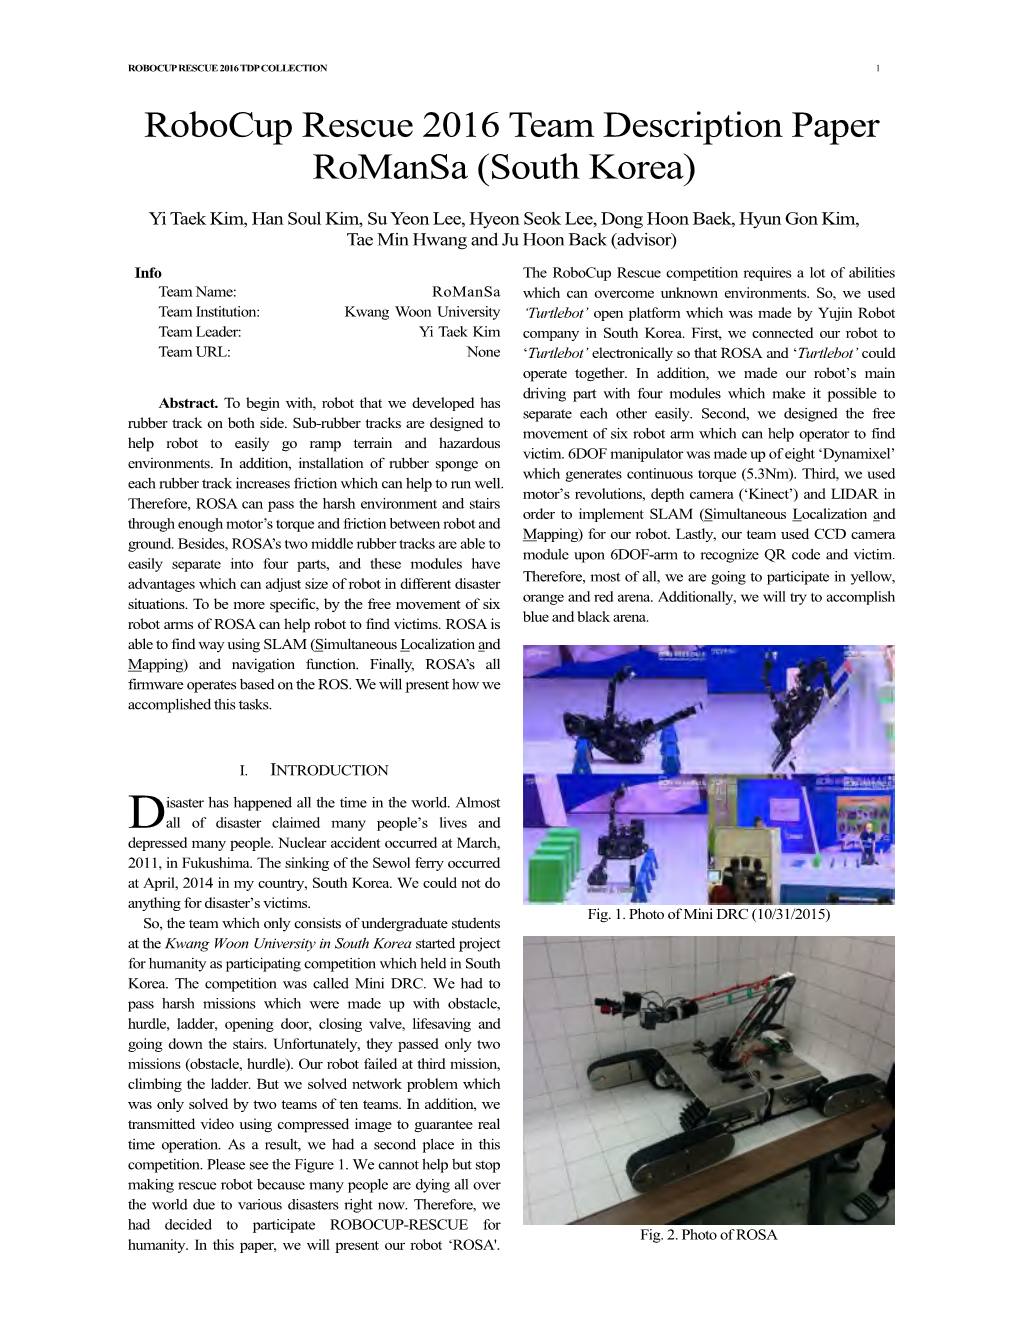 Robocup Rescue 2016 Team Description Paper Romansa (South Korea)